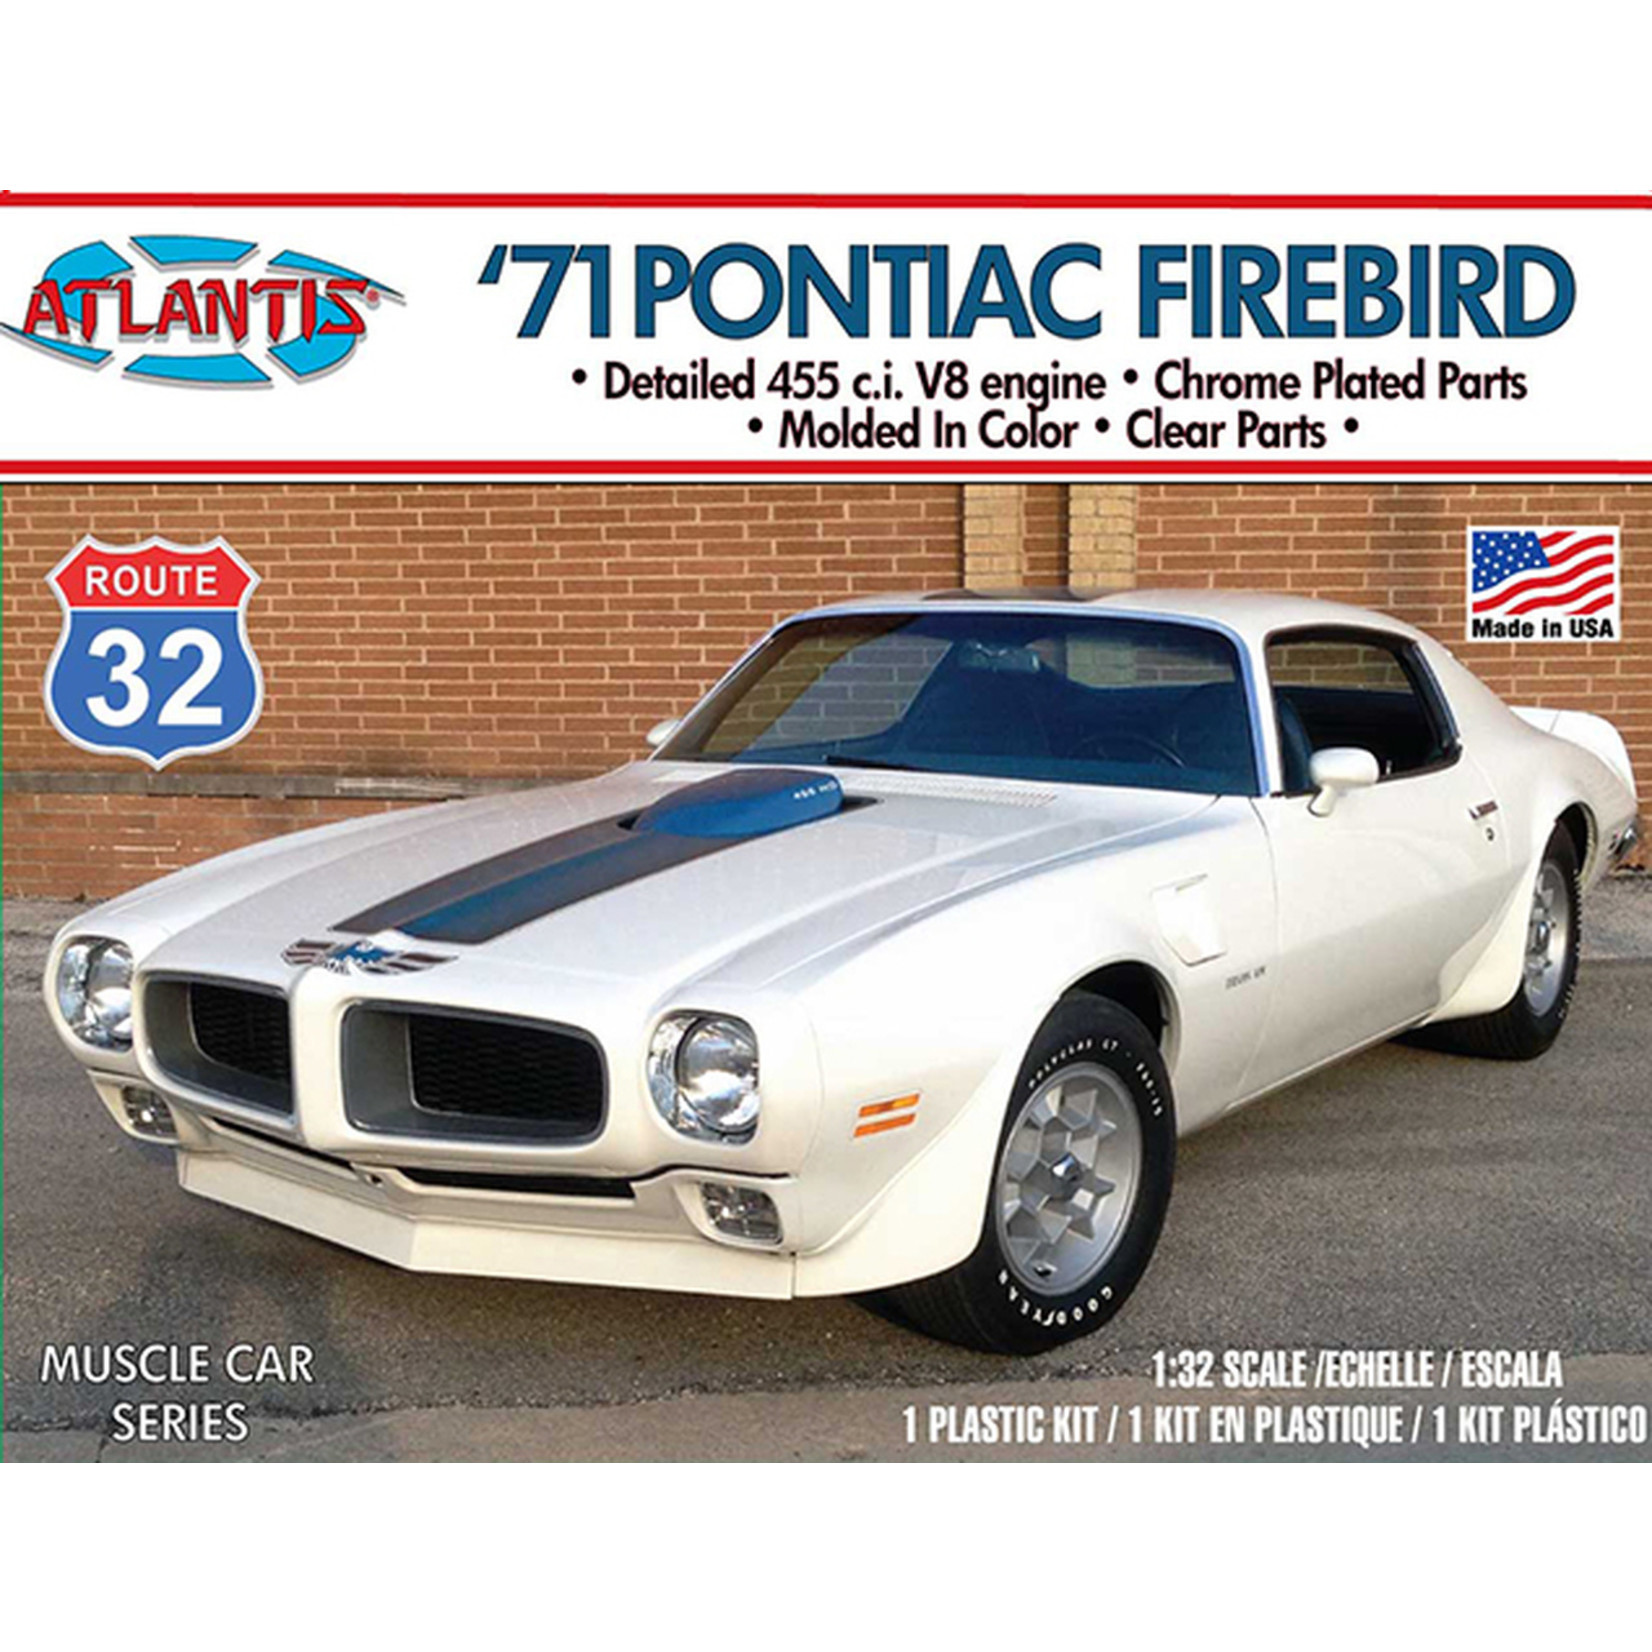 Atlantis Models AANM2009 - 1/32 1971 Pontiac Firebird Route 32 Plastic Model Kit